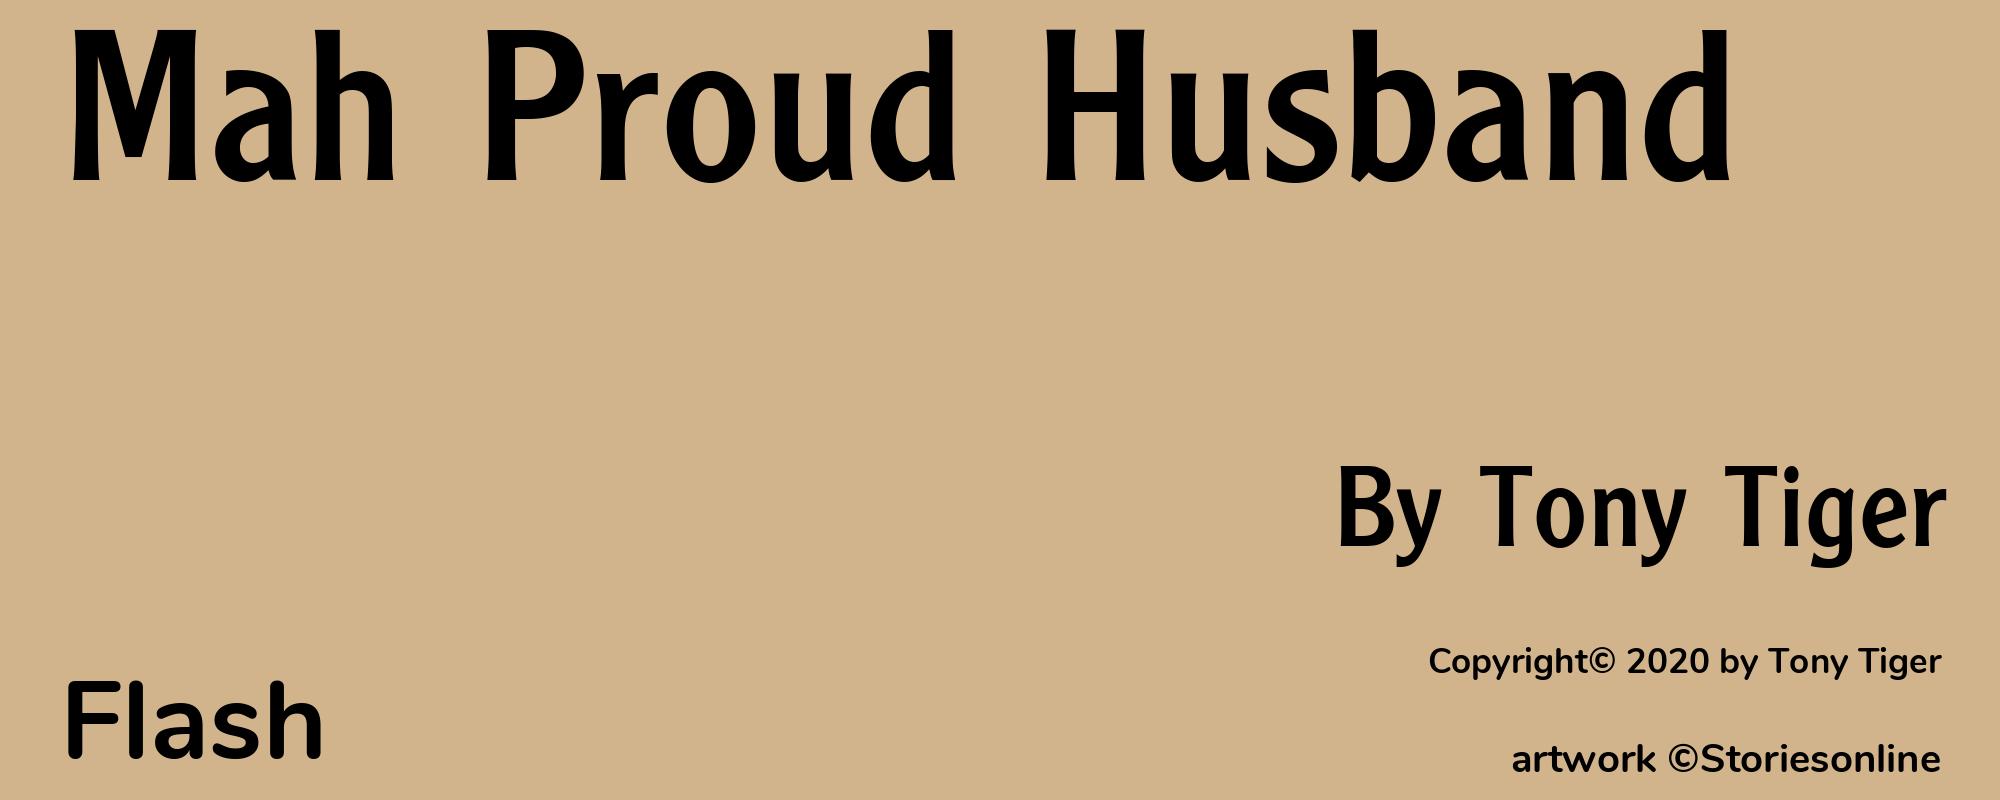 Mah Proud Husband - Cover